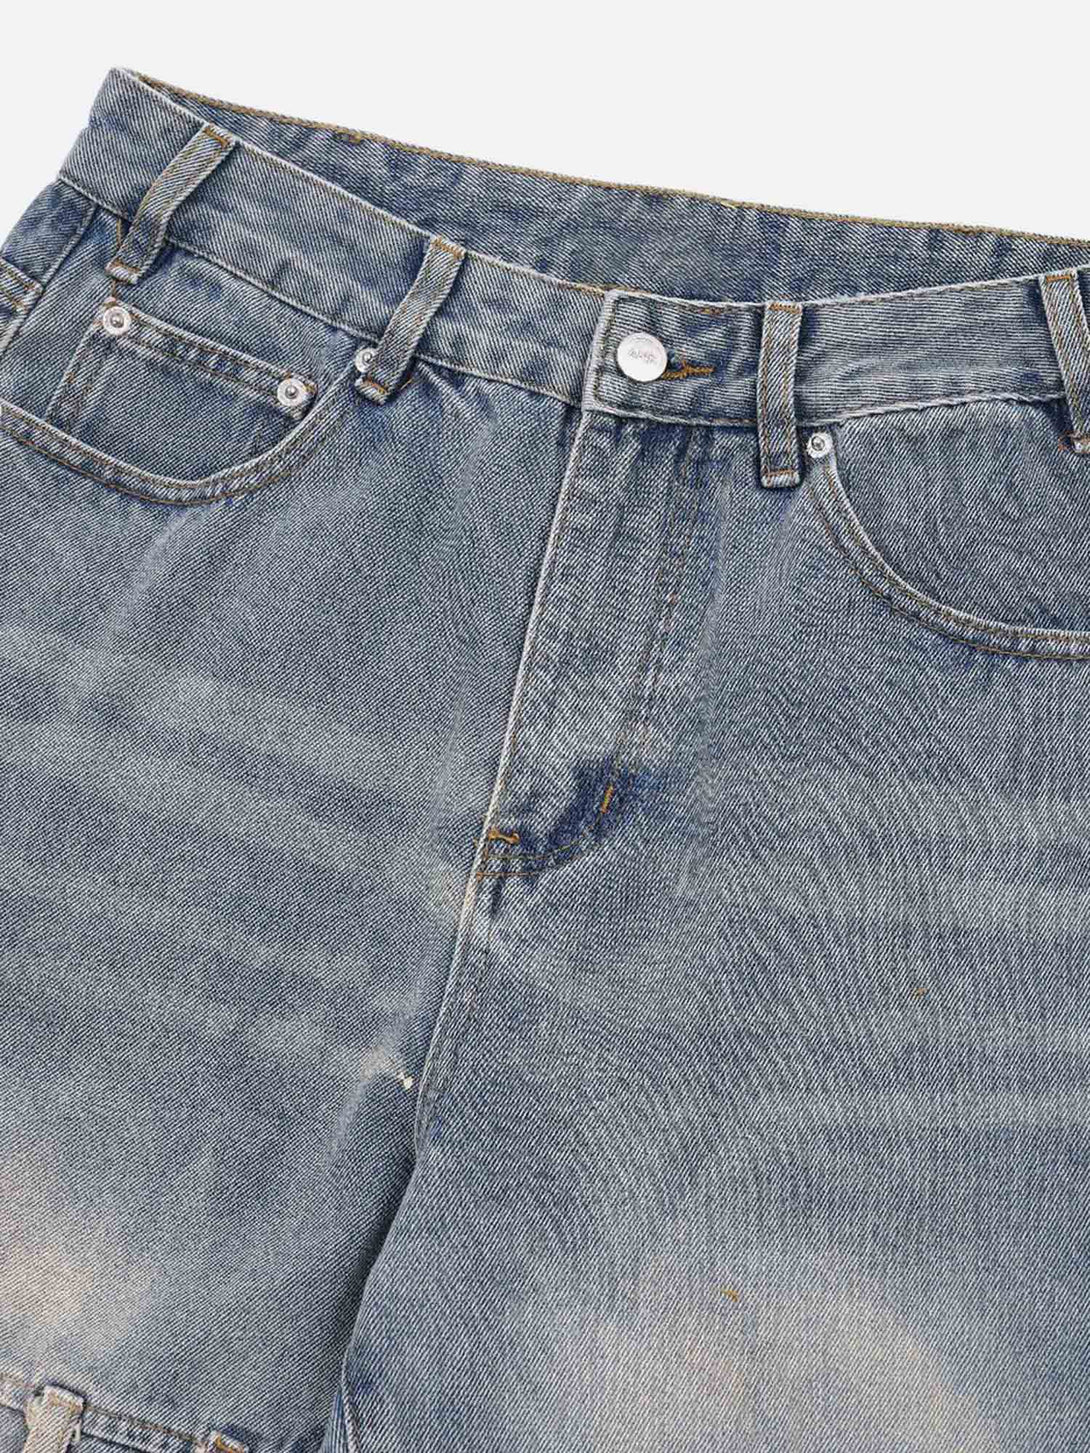 Majesda® - Street Fashion Creative Trouser Loop Design Washed Jeans- Outfit Ideas - Streetwear Fashion - majesda.com